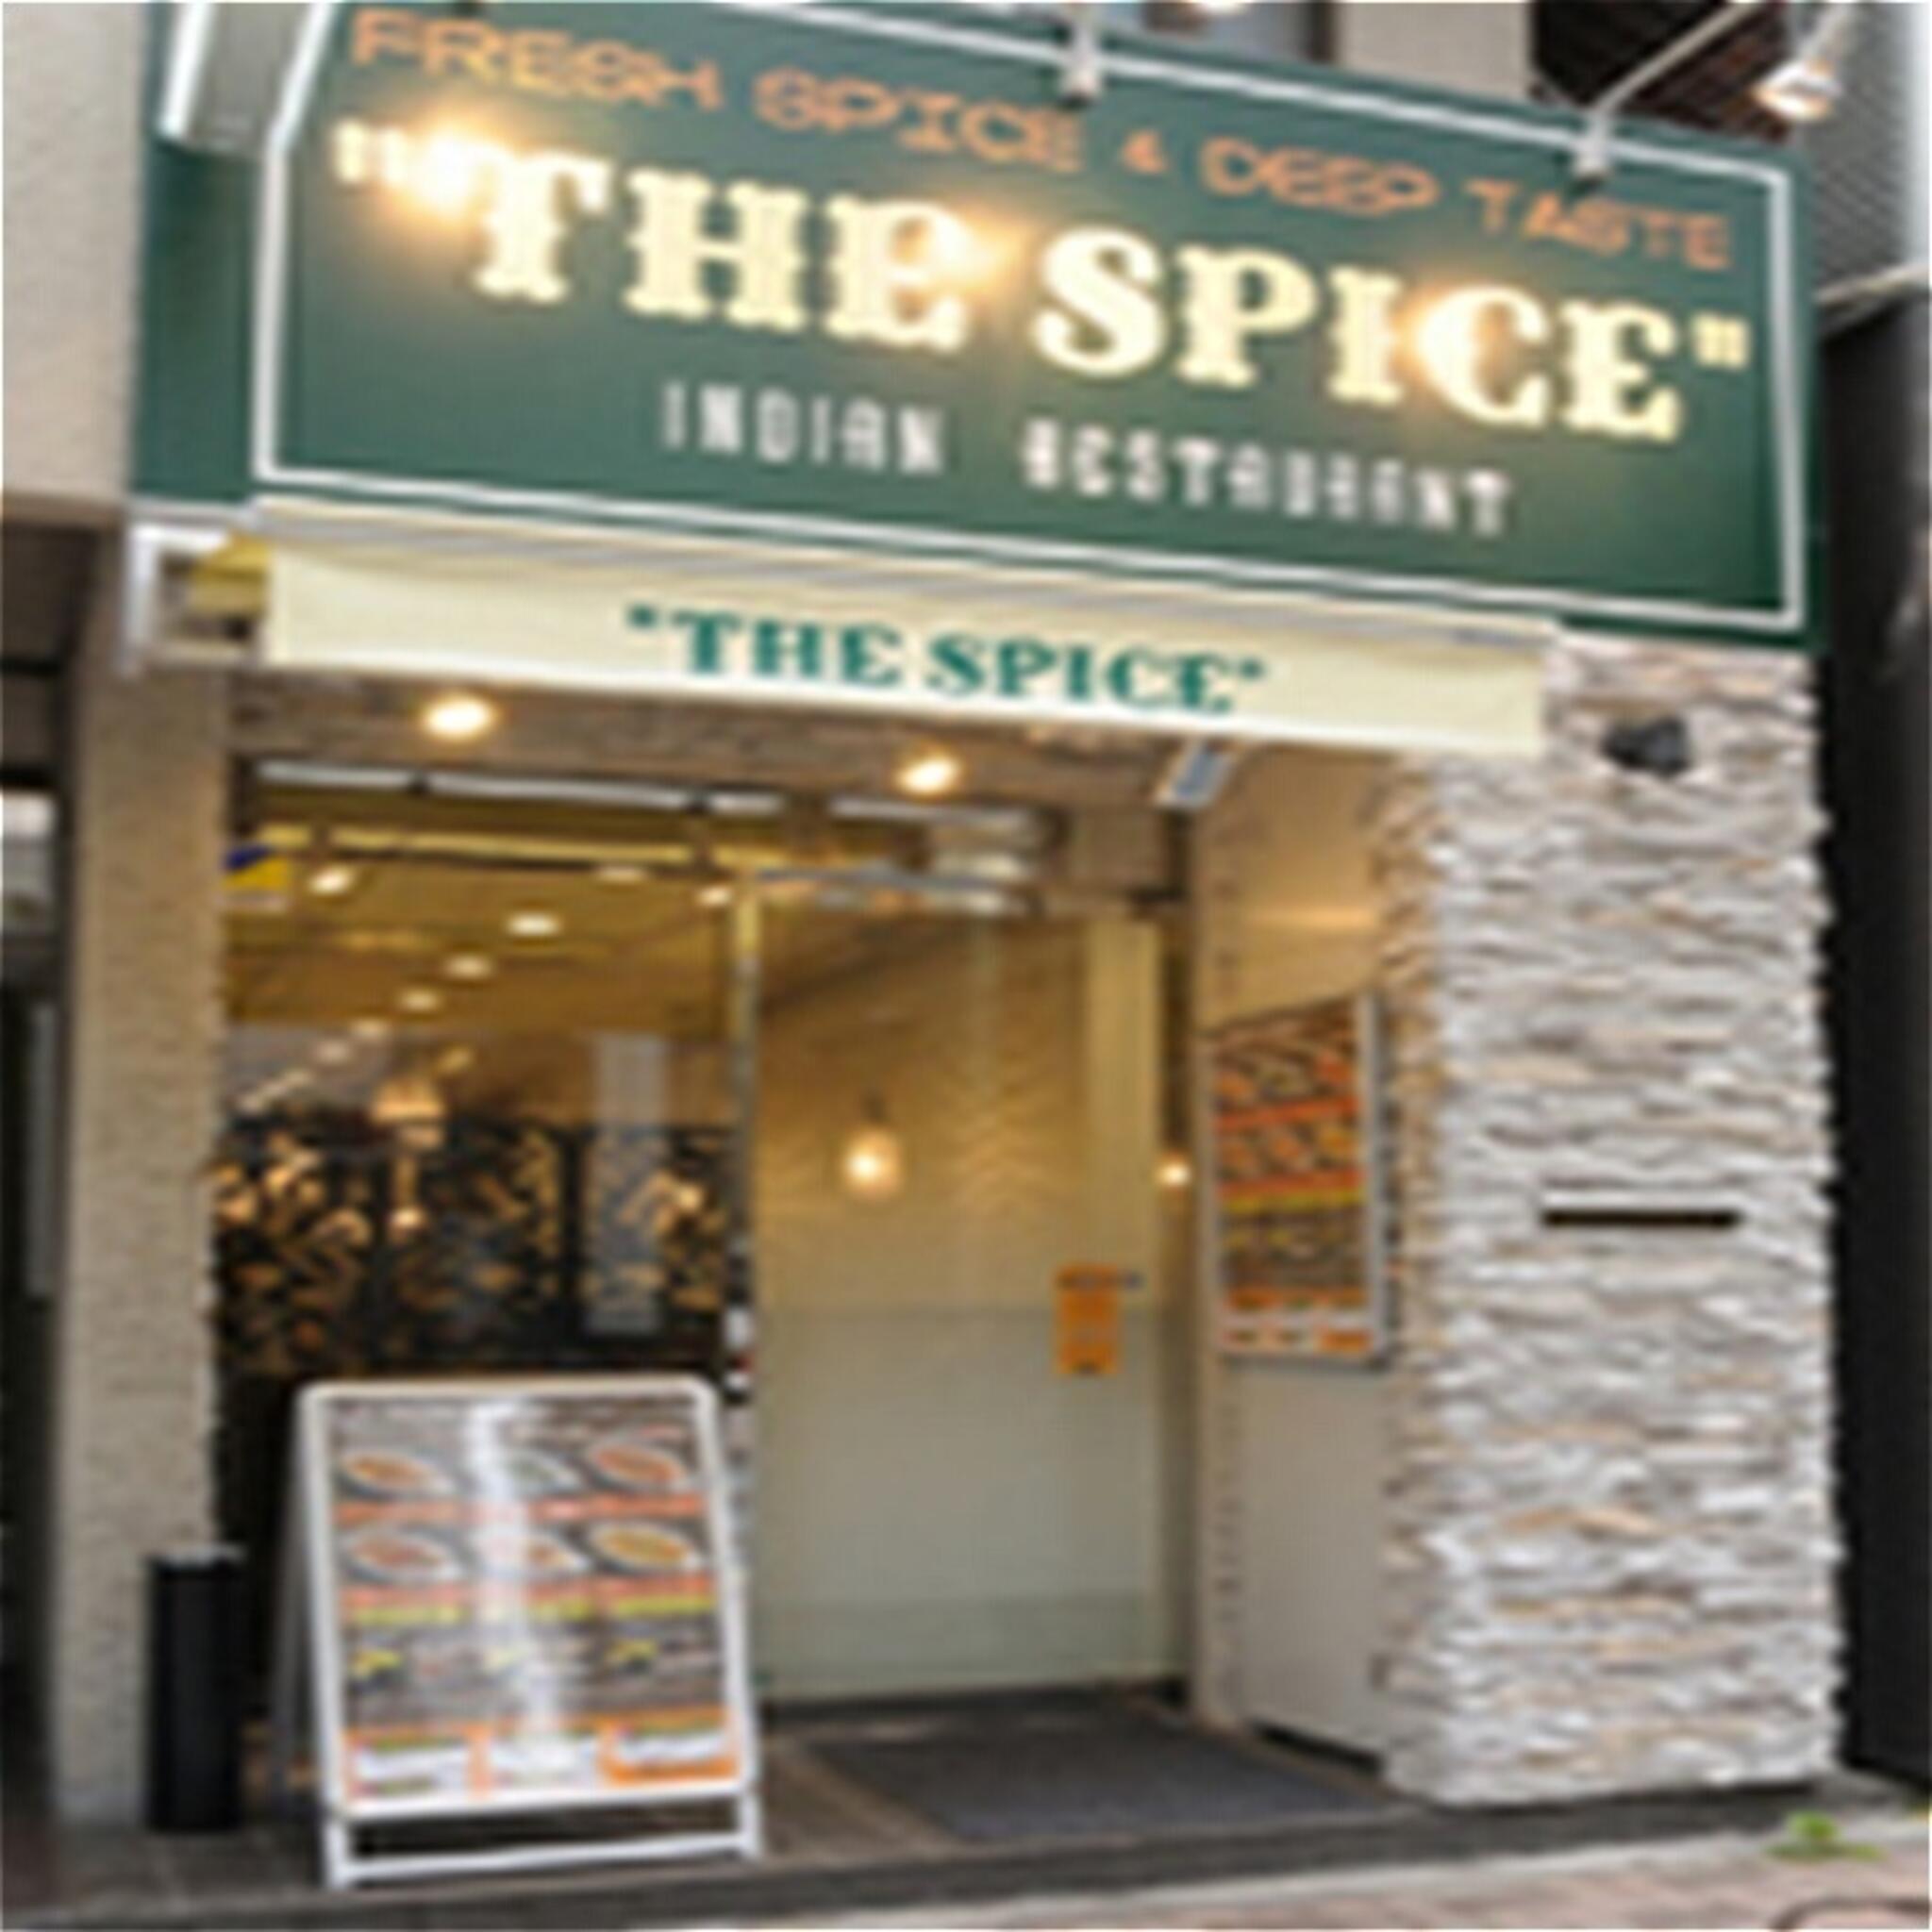 THE SPICE Indian Restaurantの代表写真2